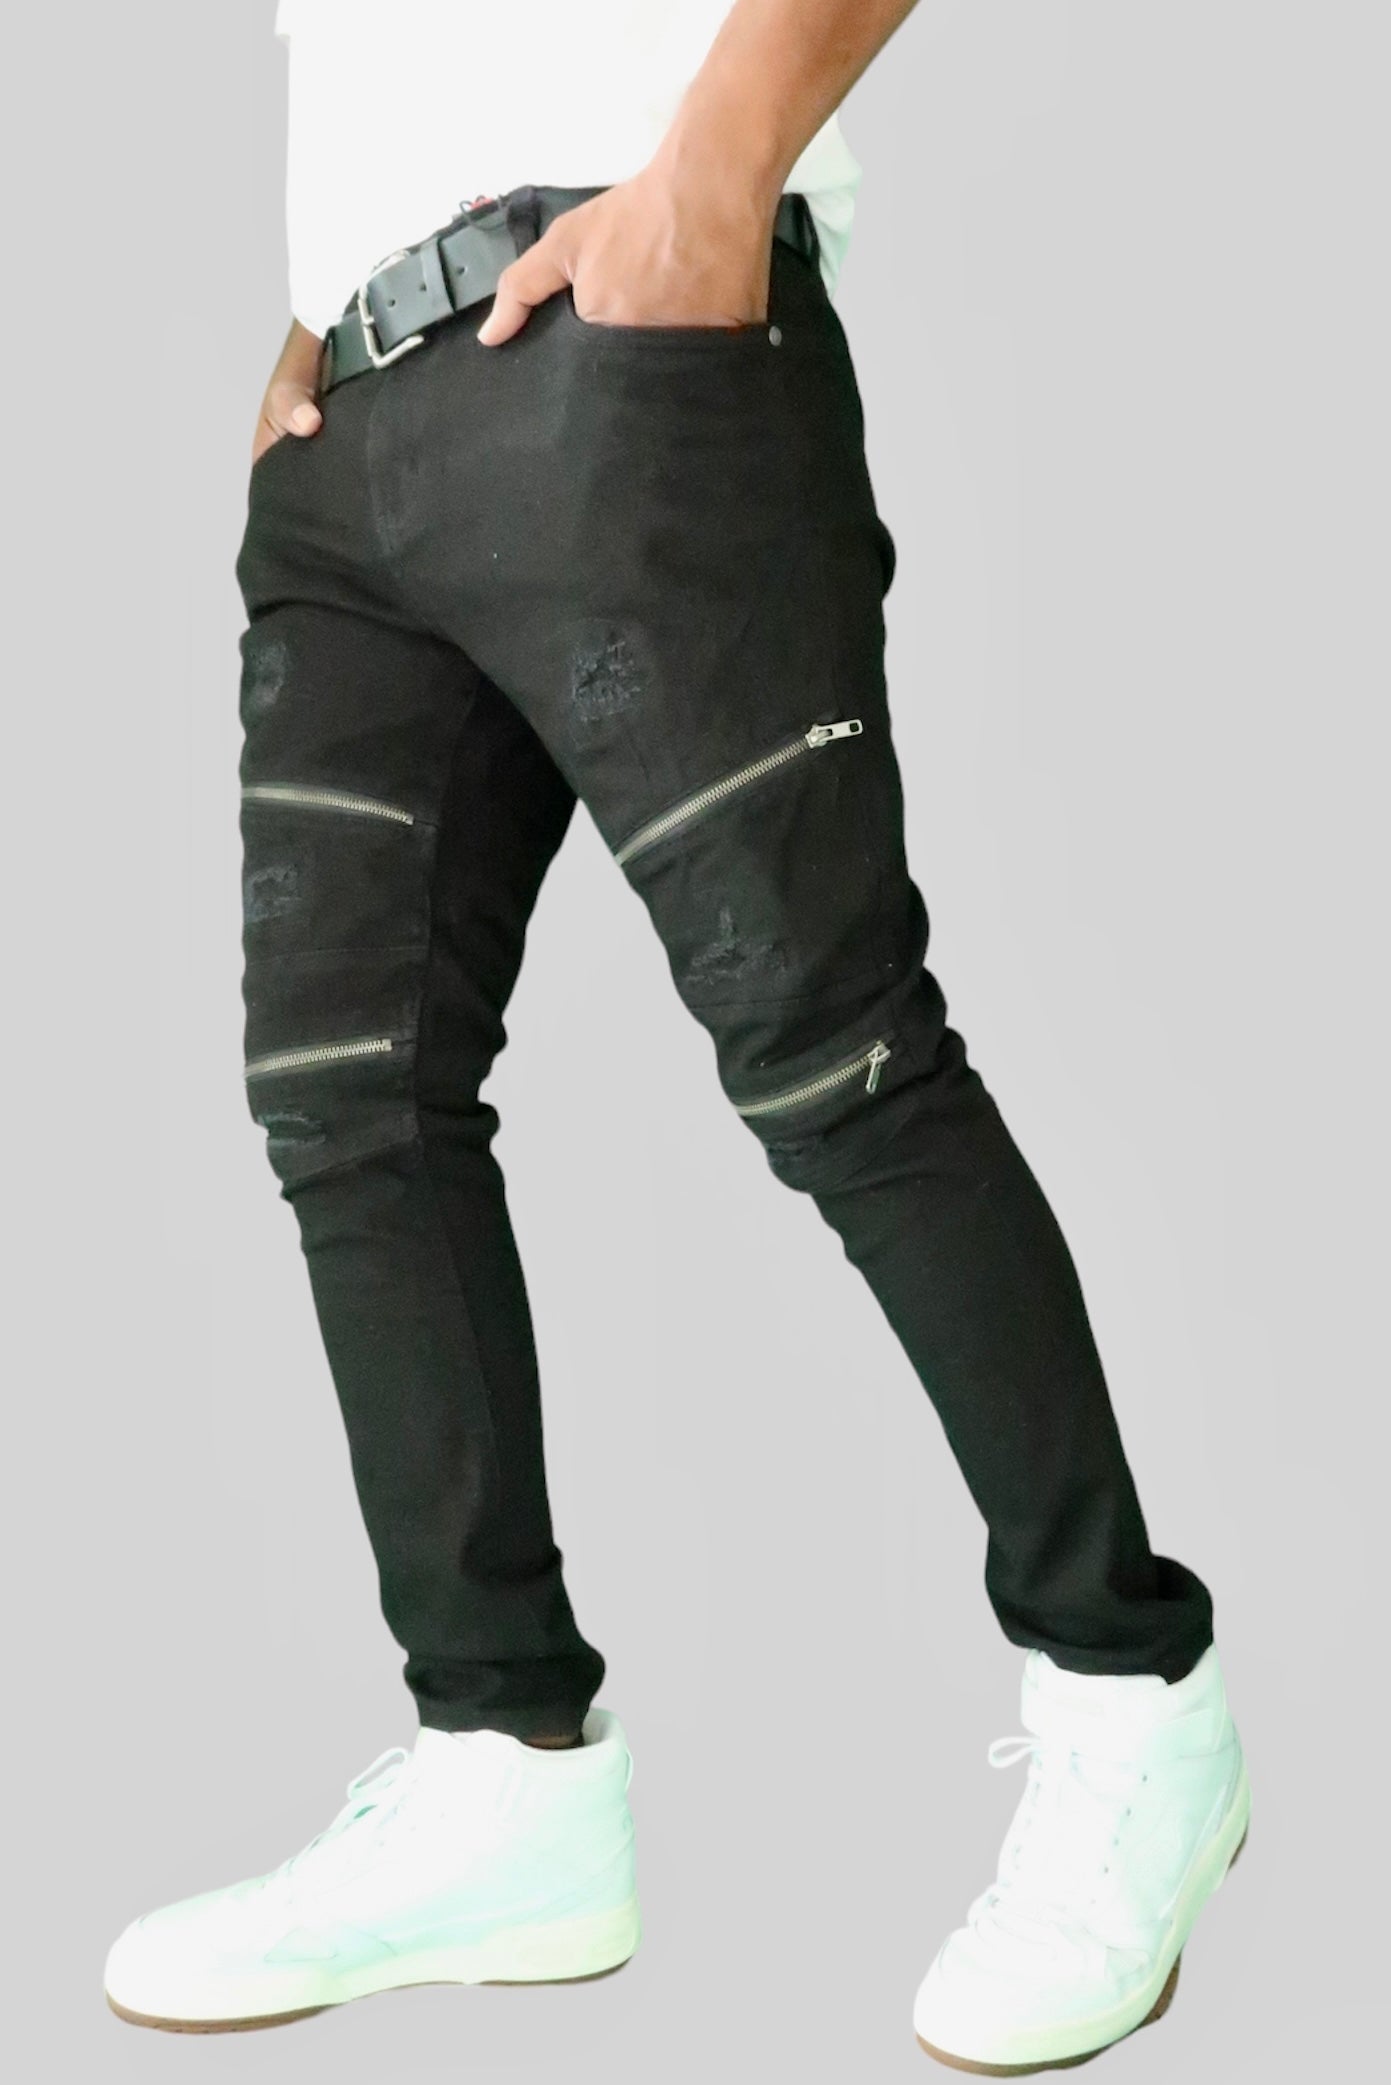 Fashion Bull Denim Pants with Zippers (Black)